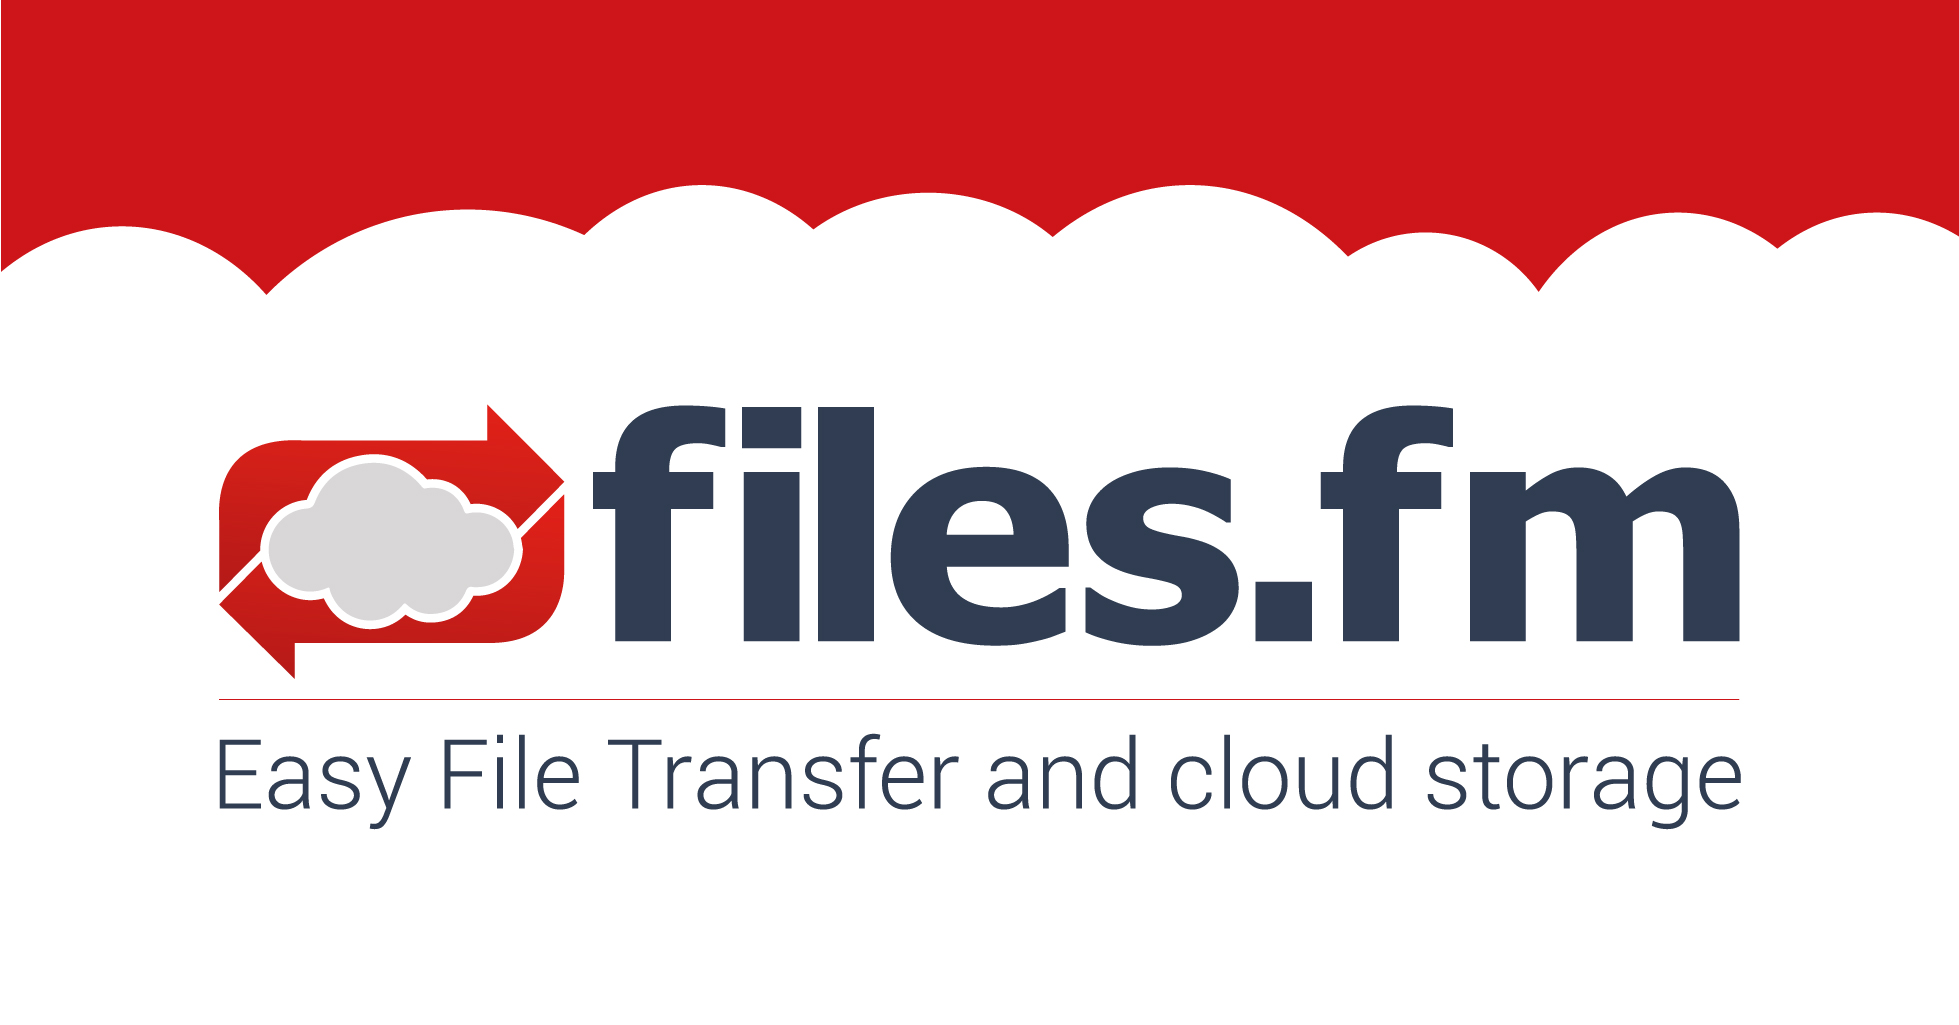 Https ru files tm. Files. File Exchanger. Https: // ru. Files. Fm/u/k8twvw6vt.